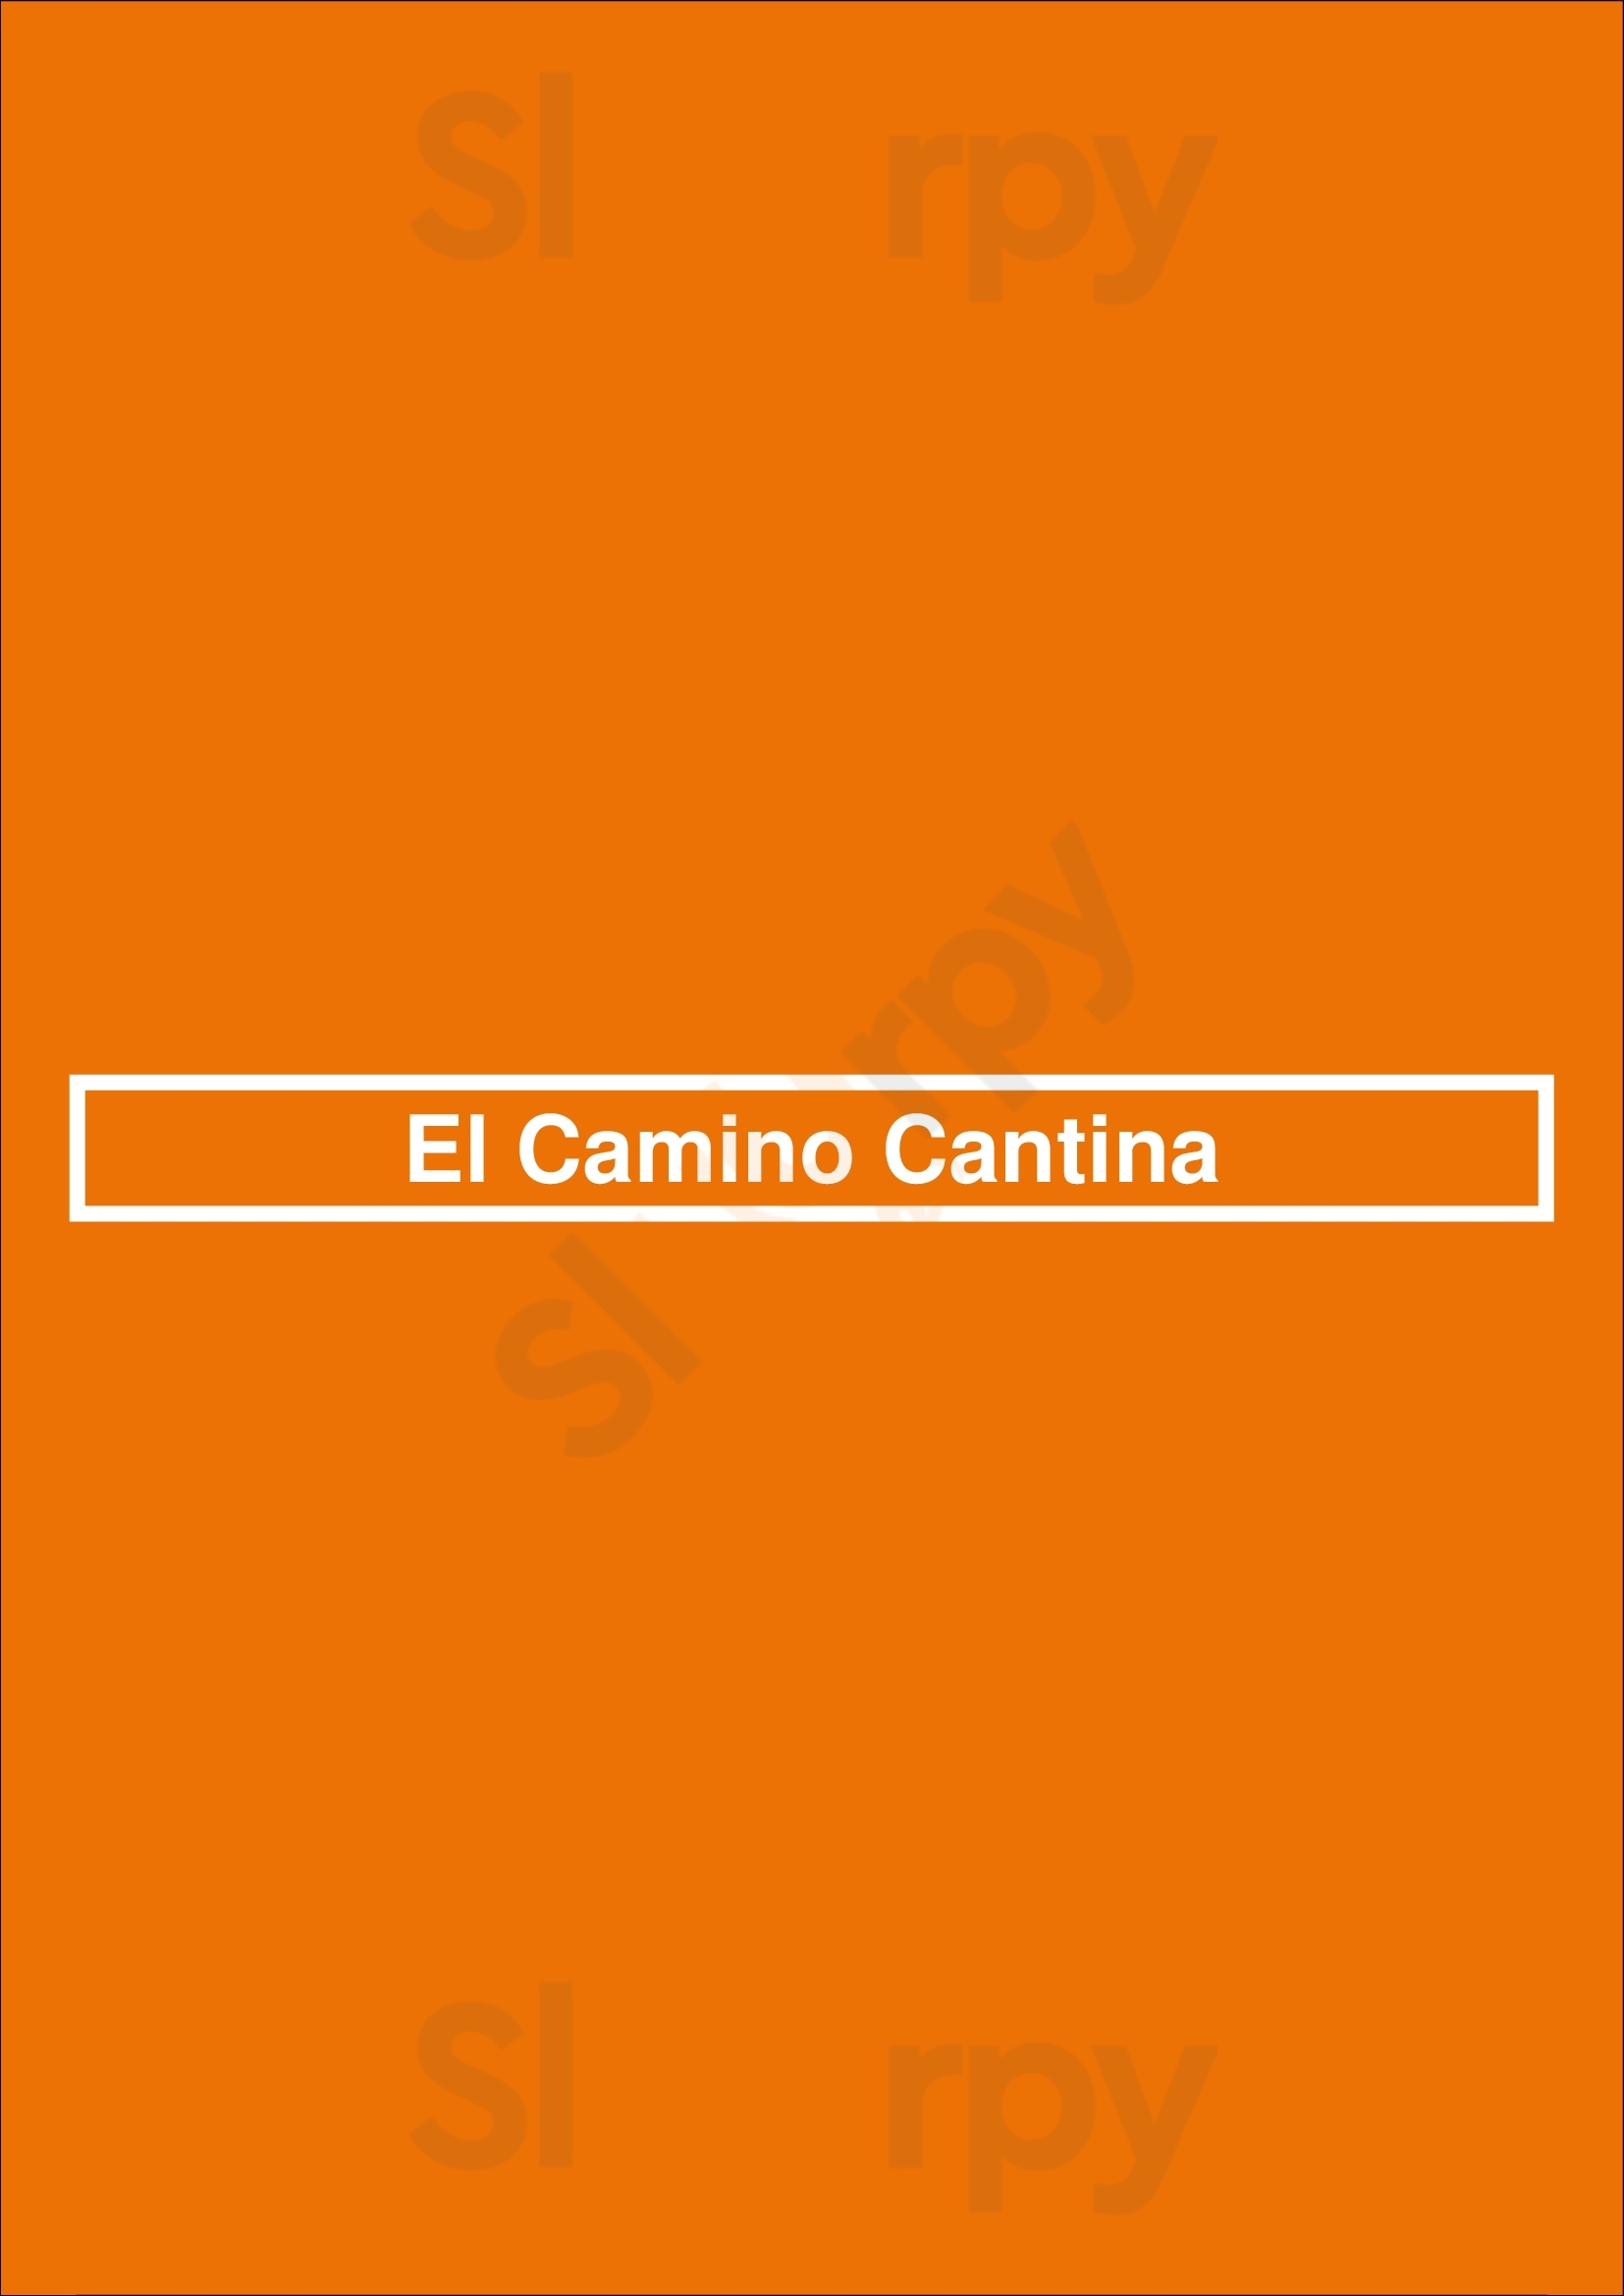 El Camino Cantina Manly Menu - 1